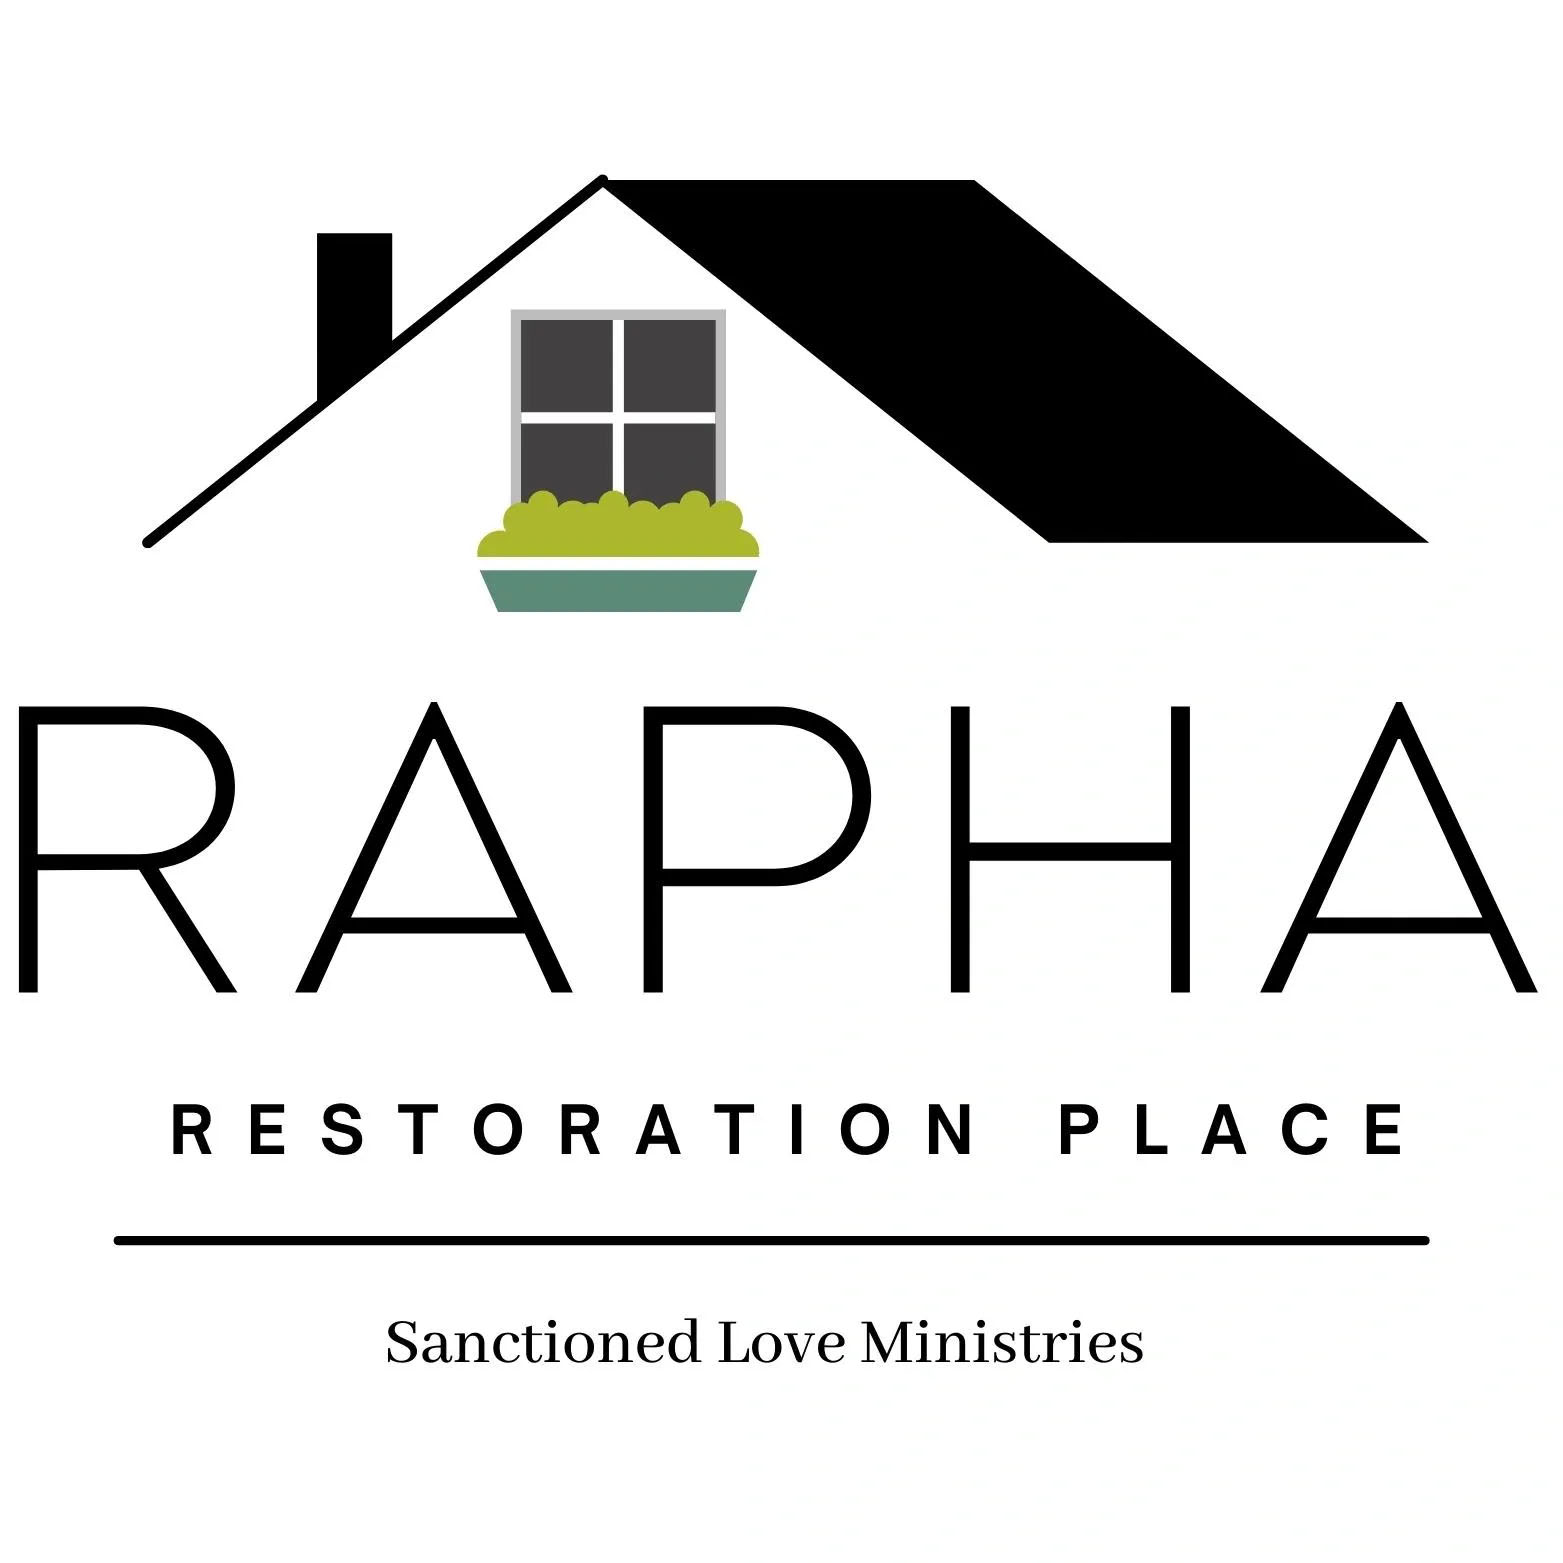 Rapha Restoration Place